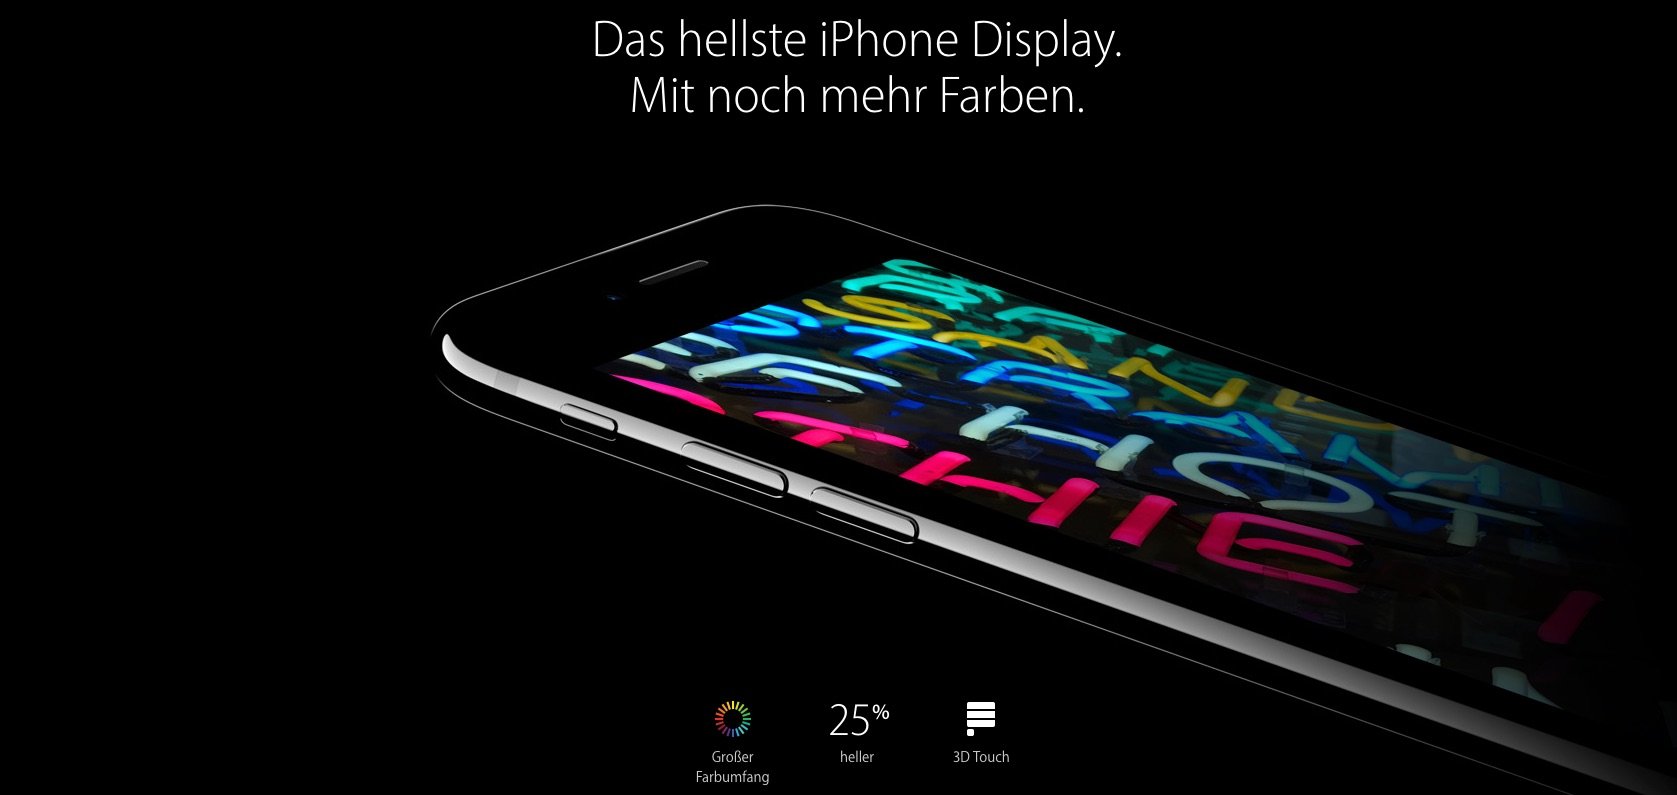 iPhone 7 im Display-Test: iPhone 7 bricht Smartphone Display Rekorde 3